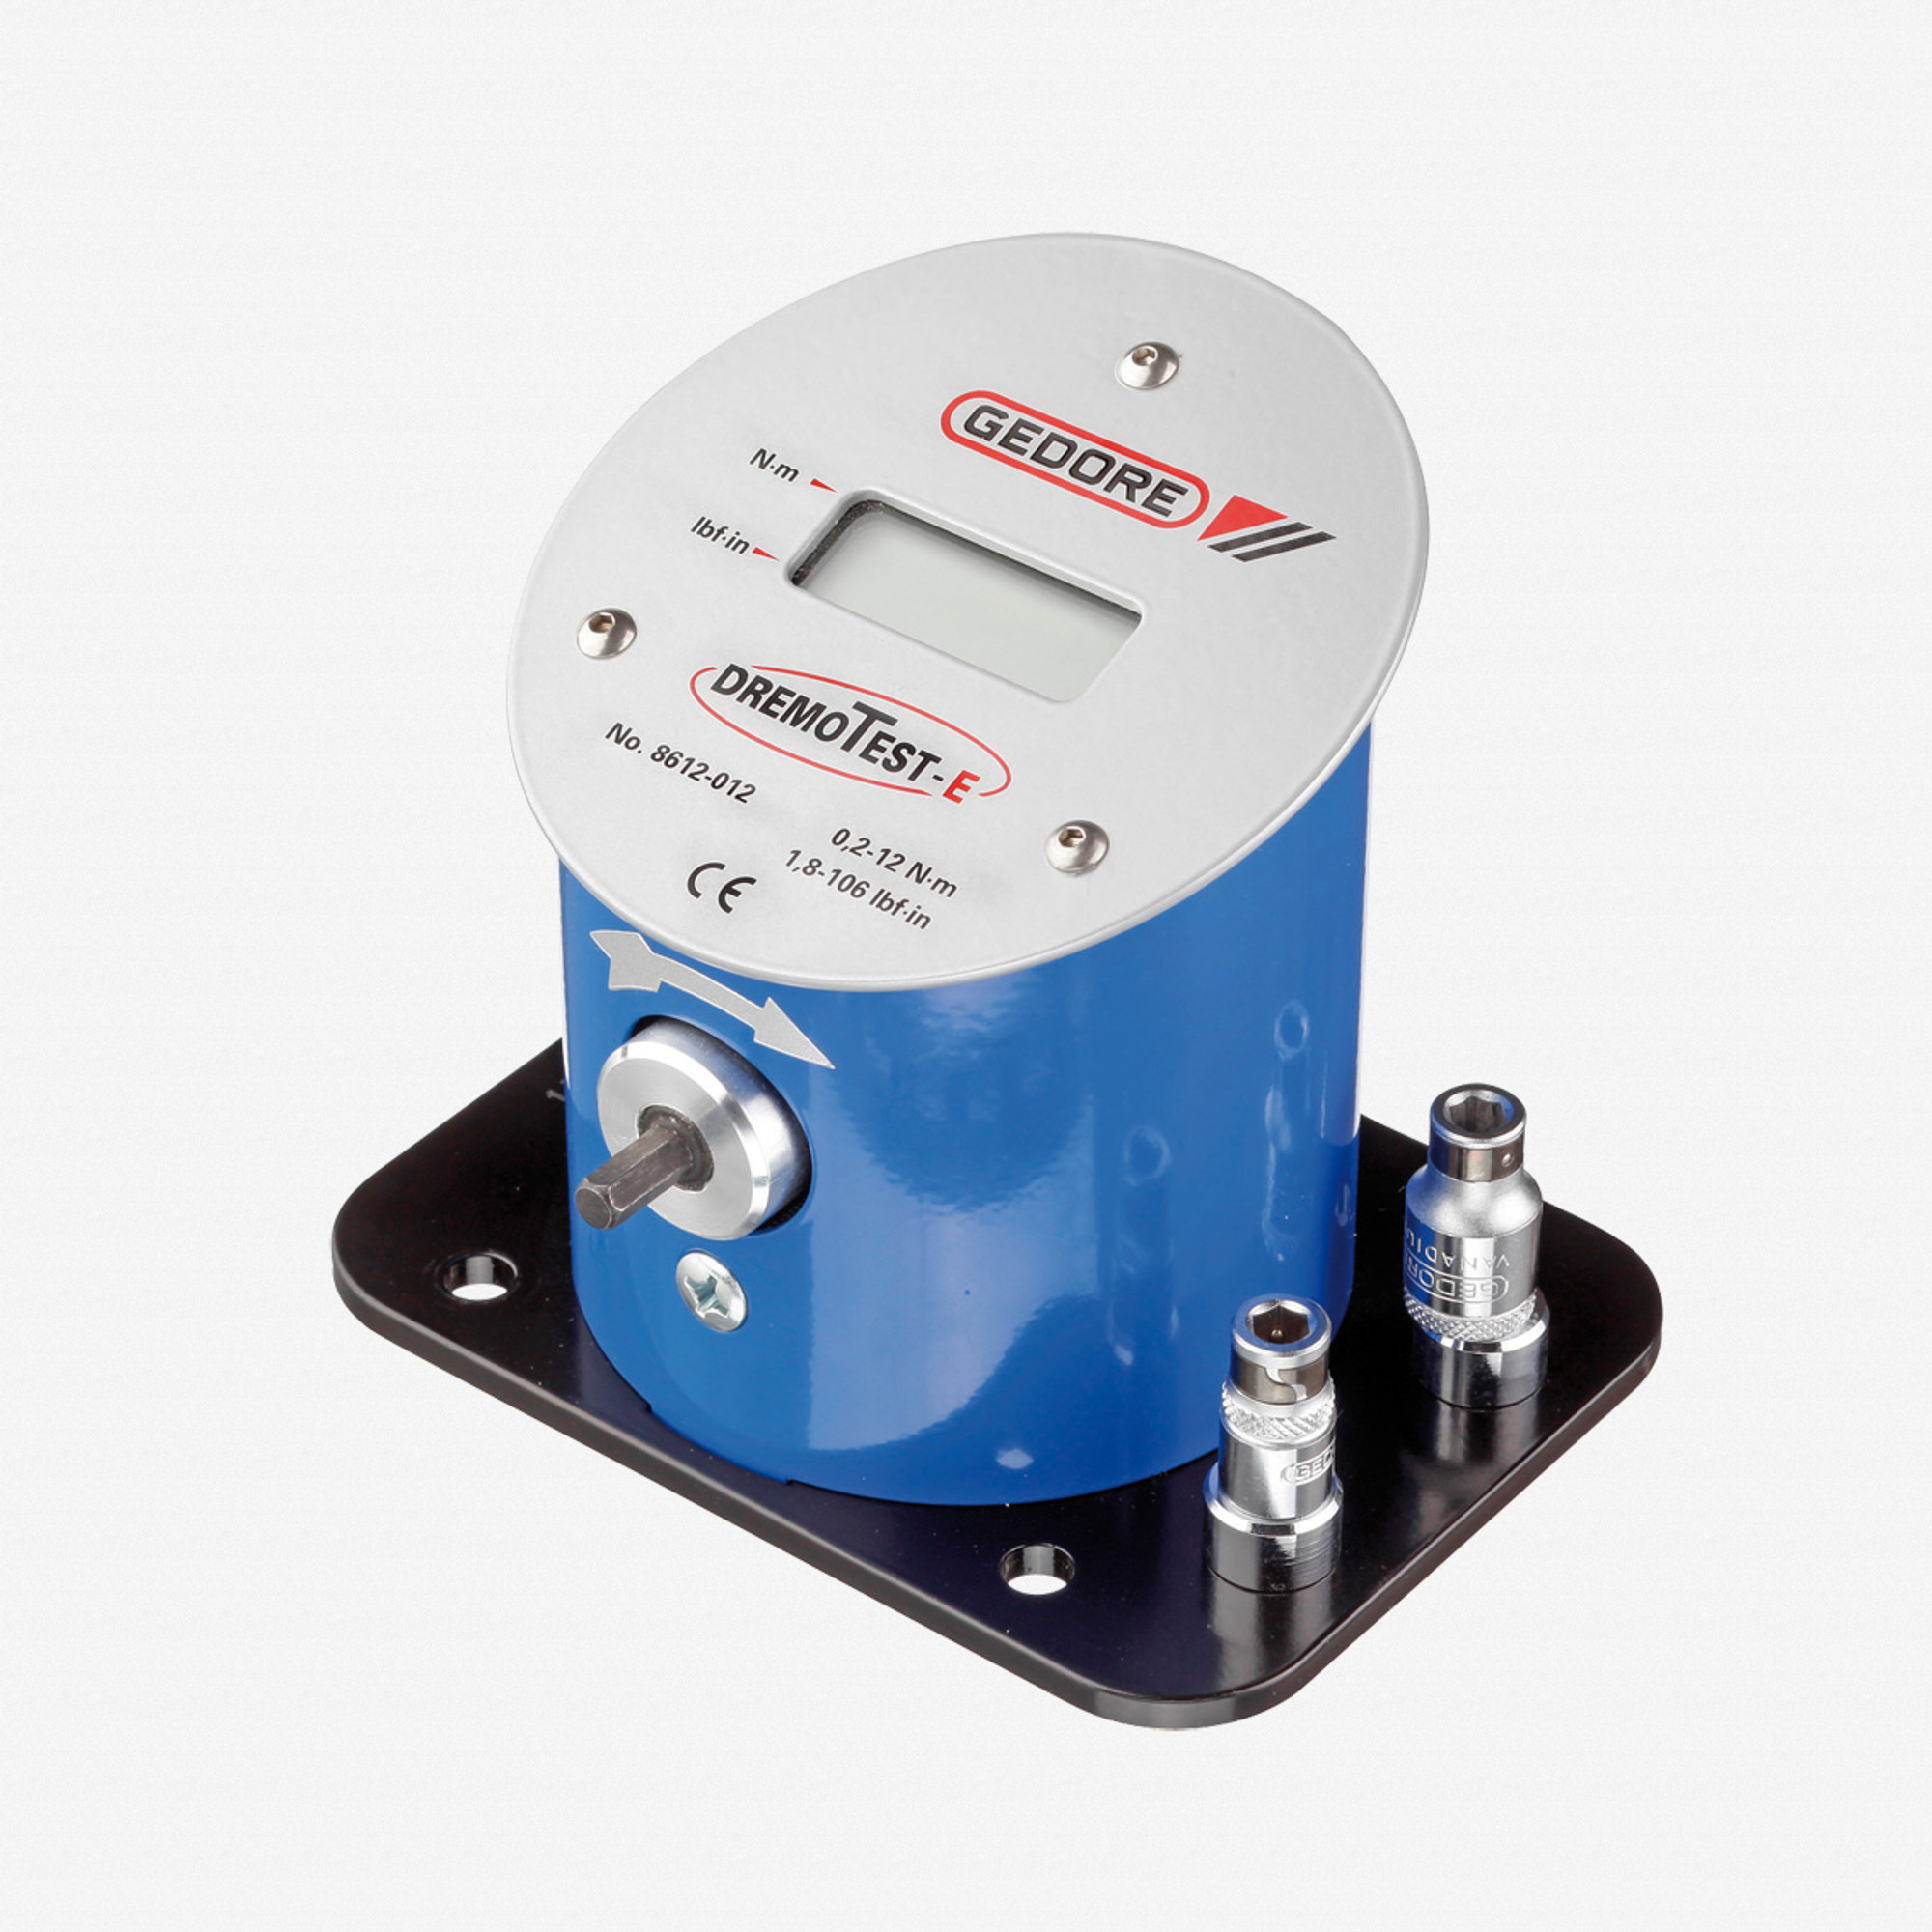 Gedore 8612-012 Electronic torque tester DREMOTEST E 0.2-12 Nm